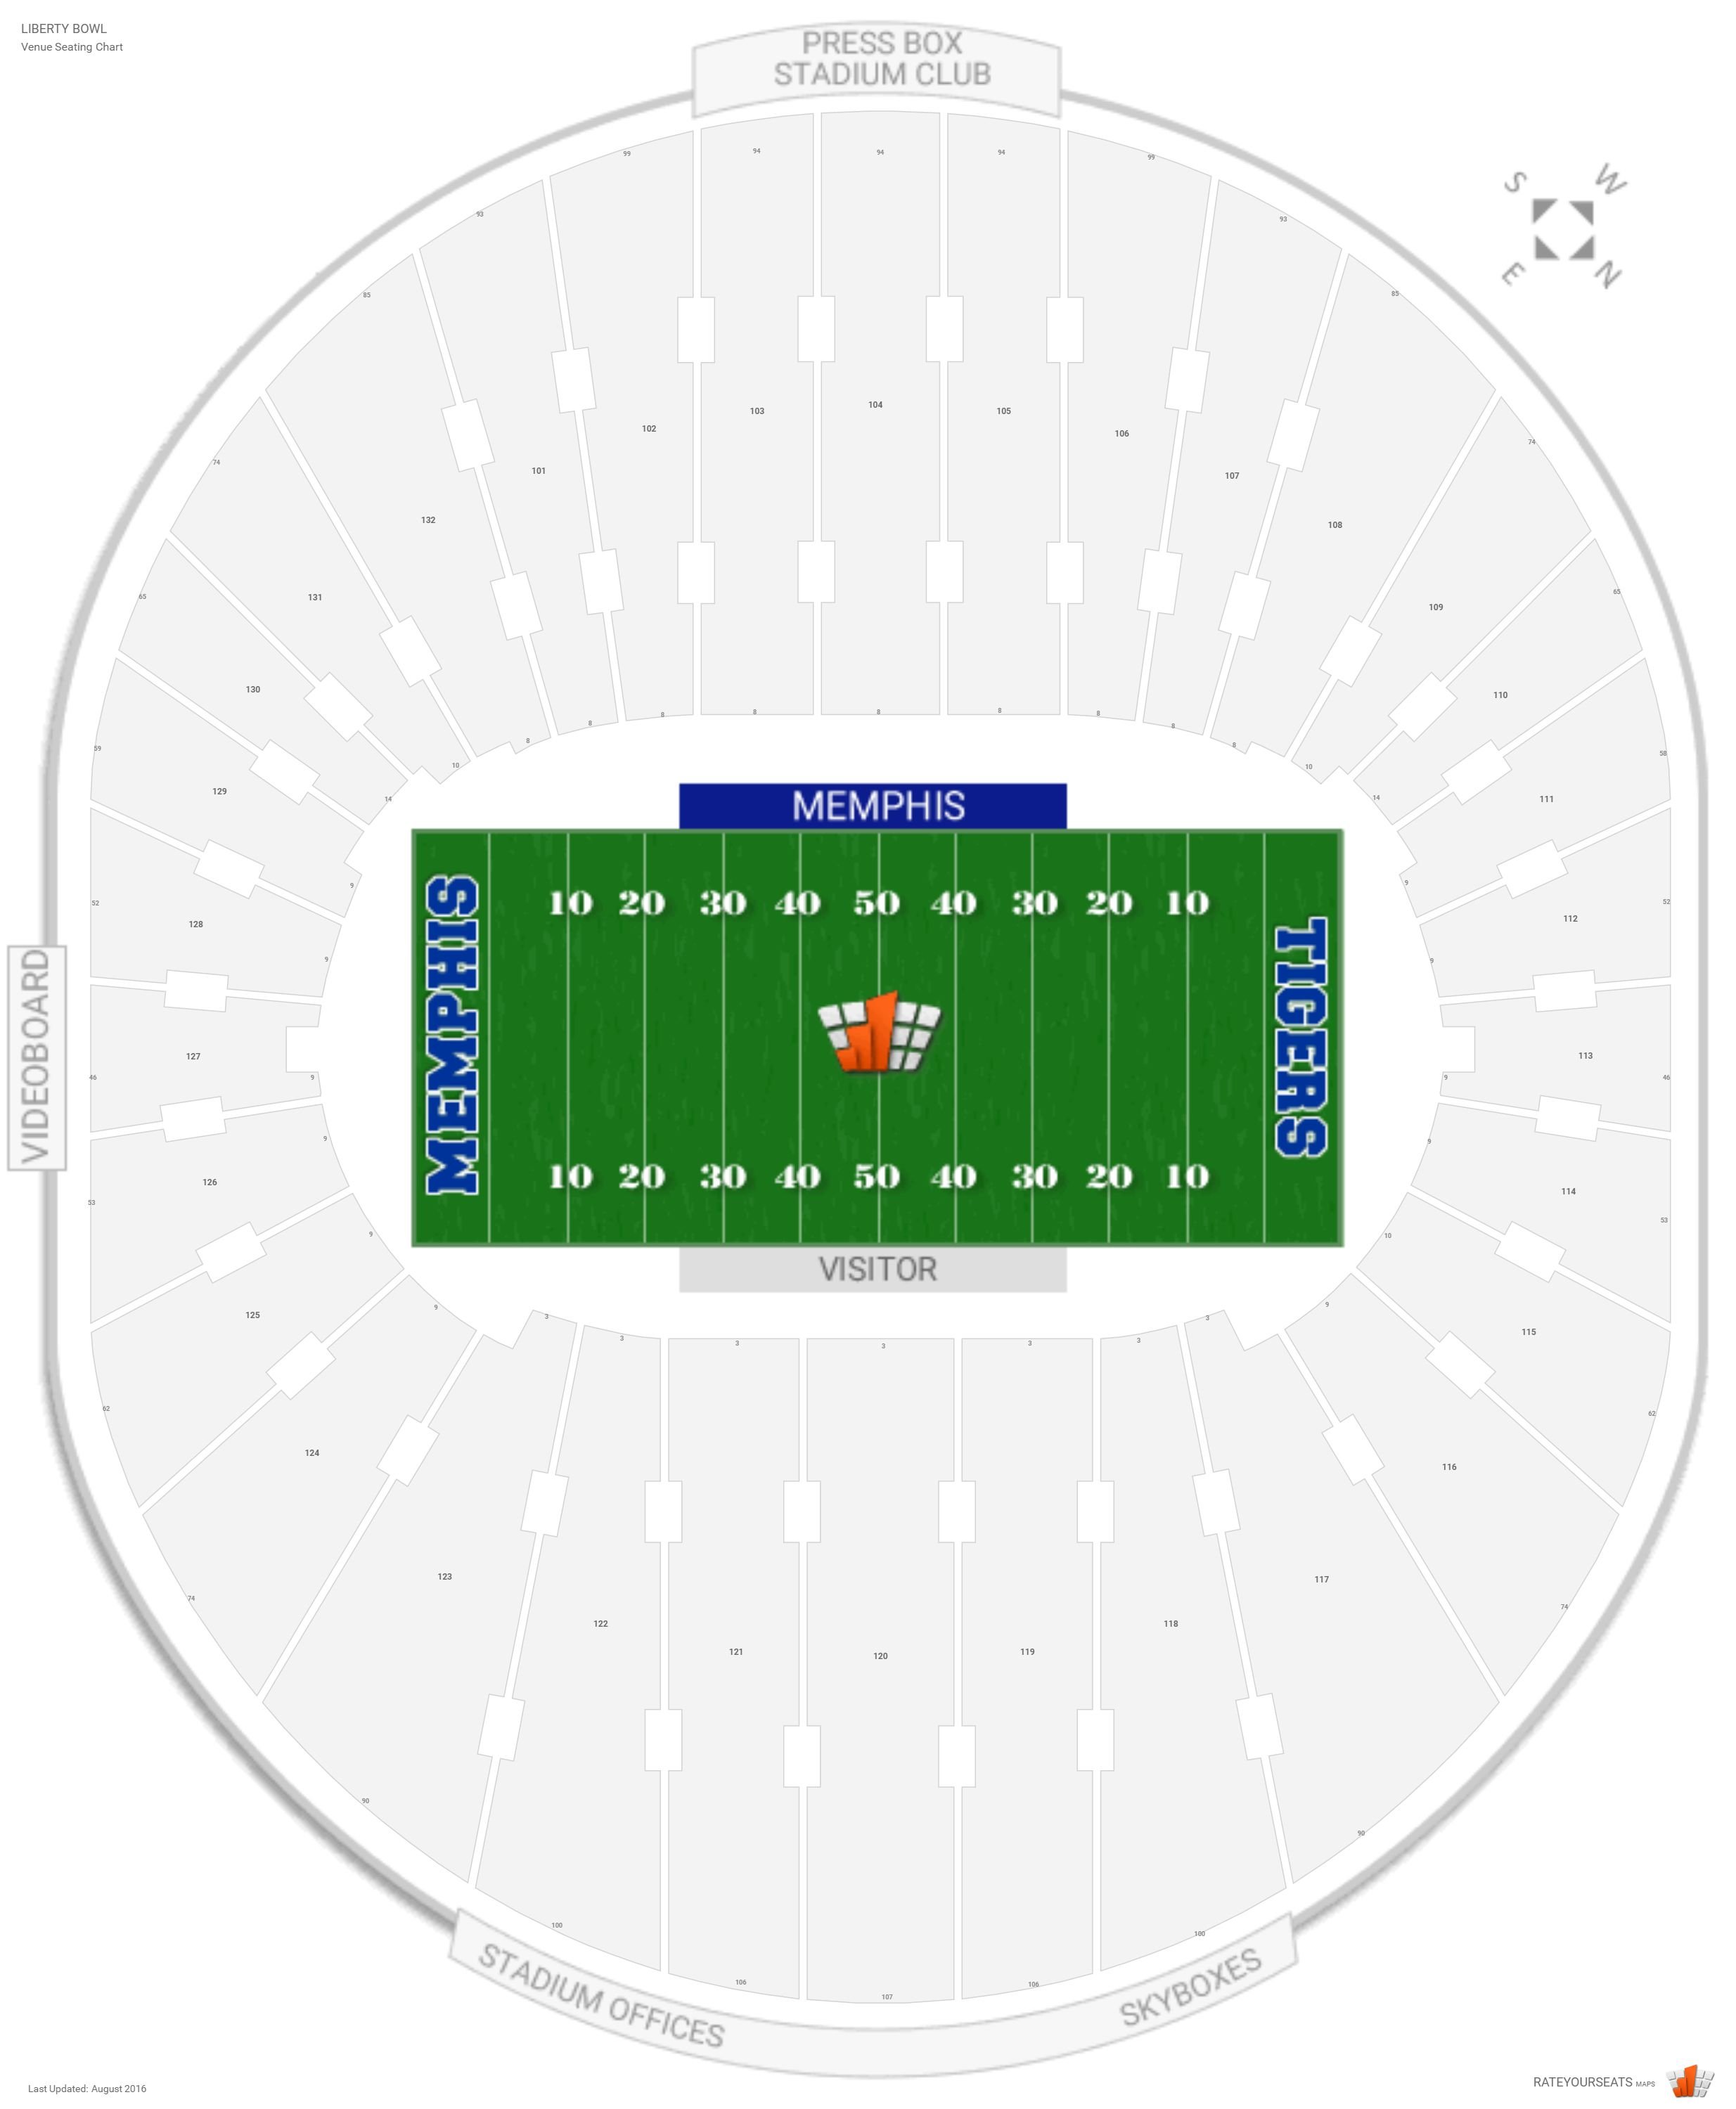 Liberty Bowl (Memphis) Seating Guide - RateYourSeats.com